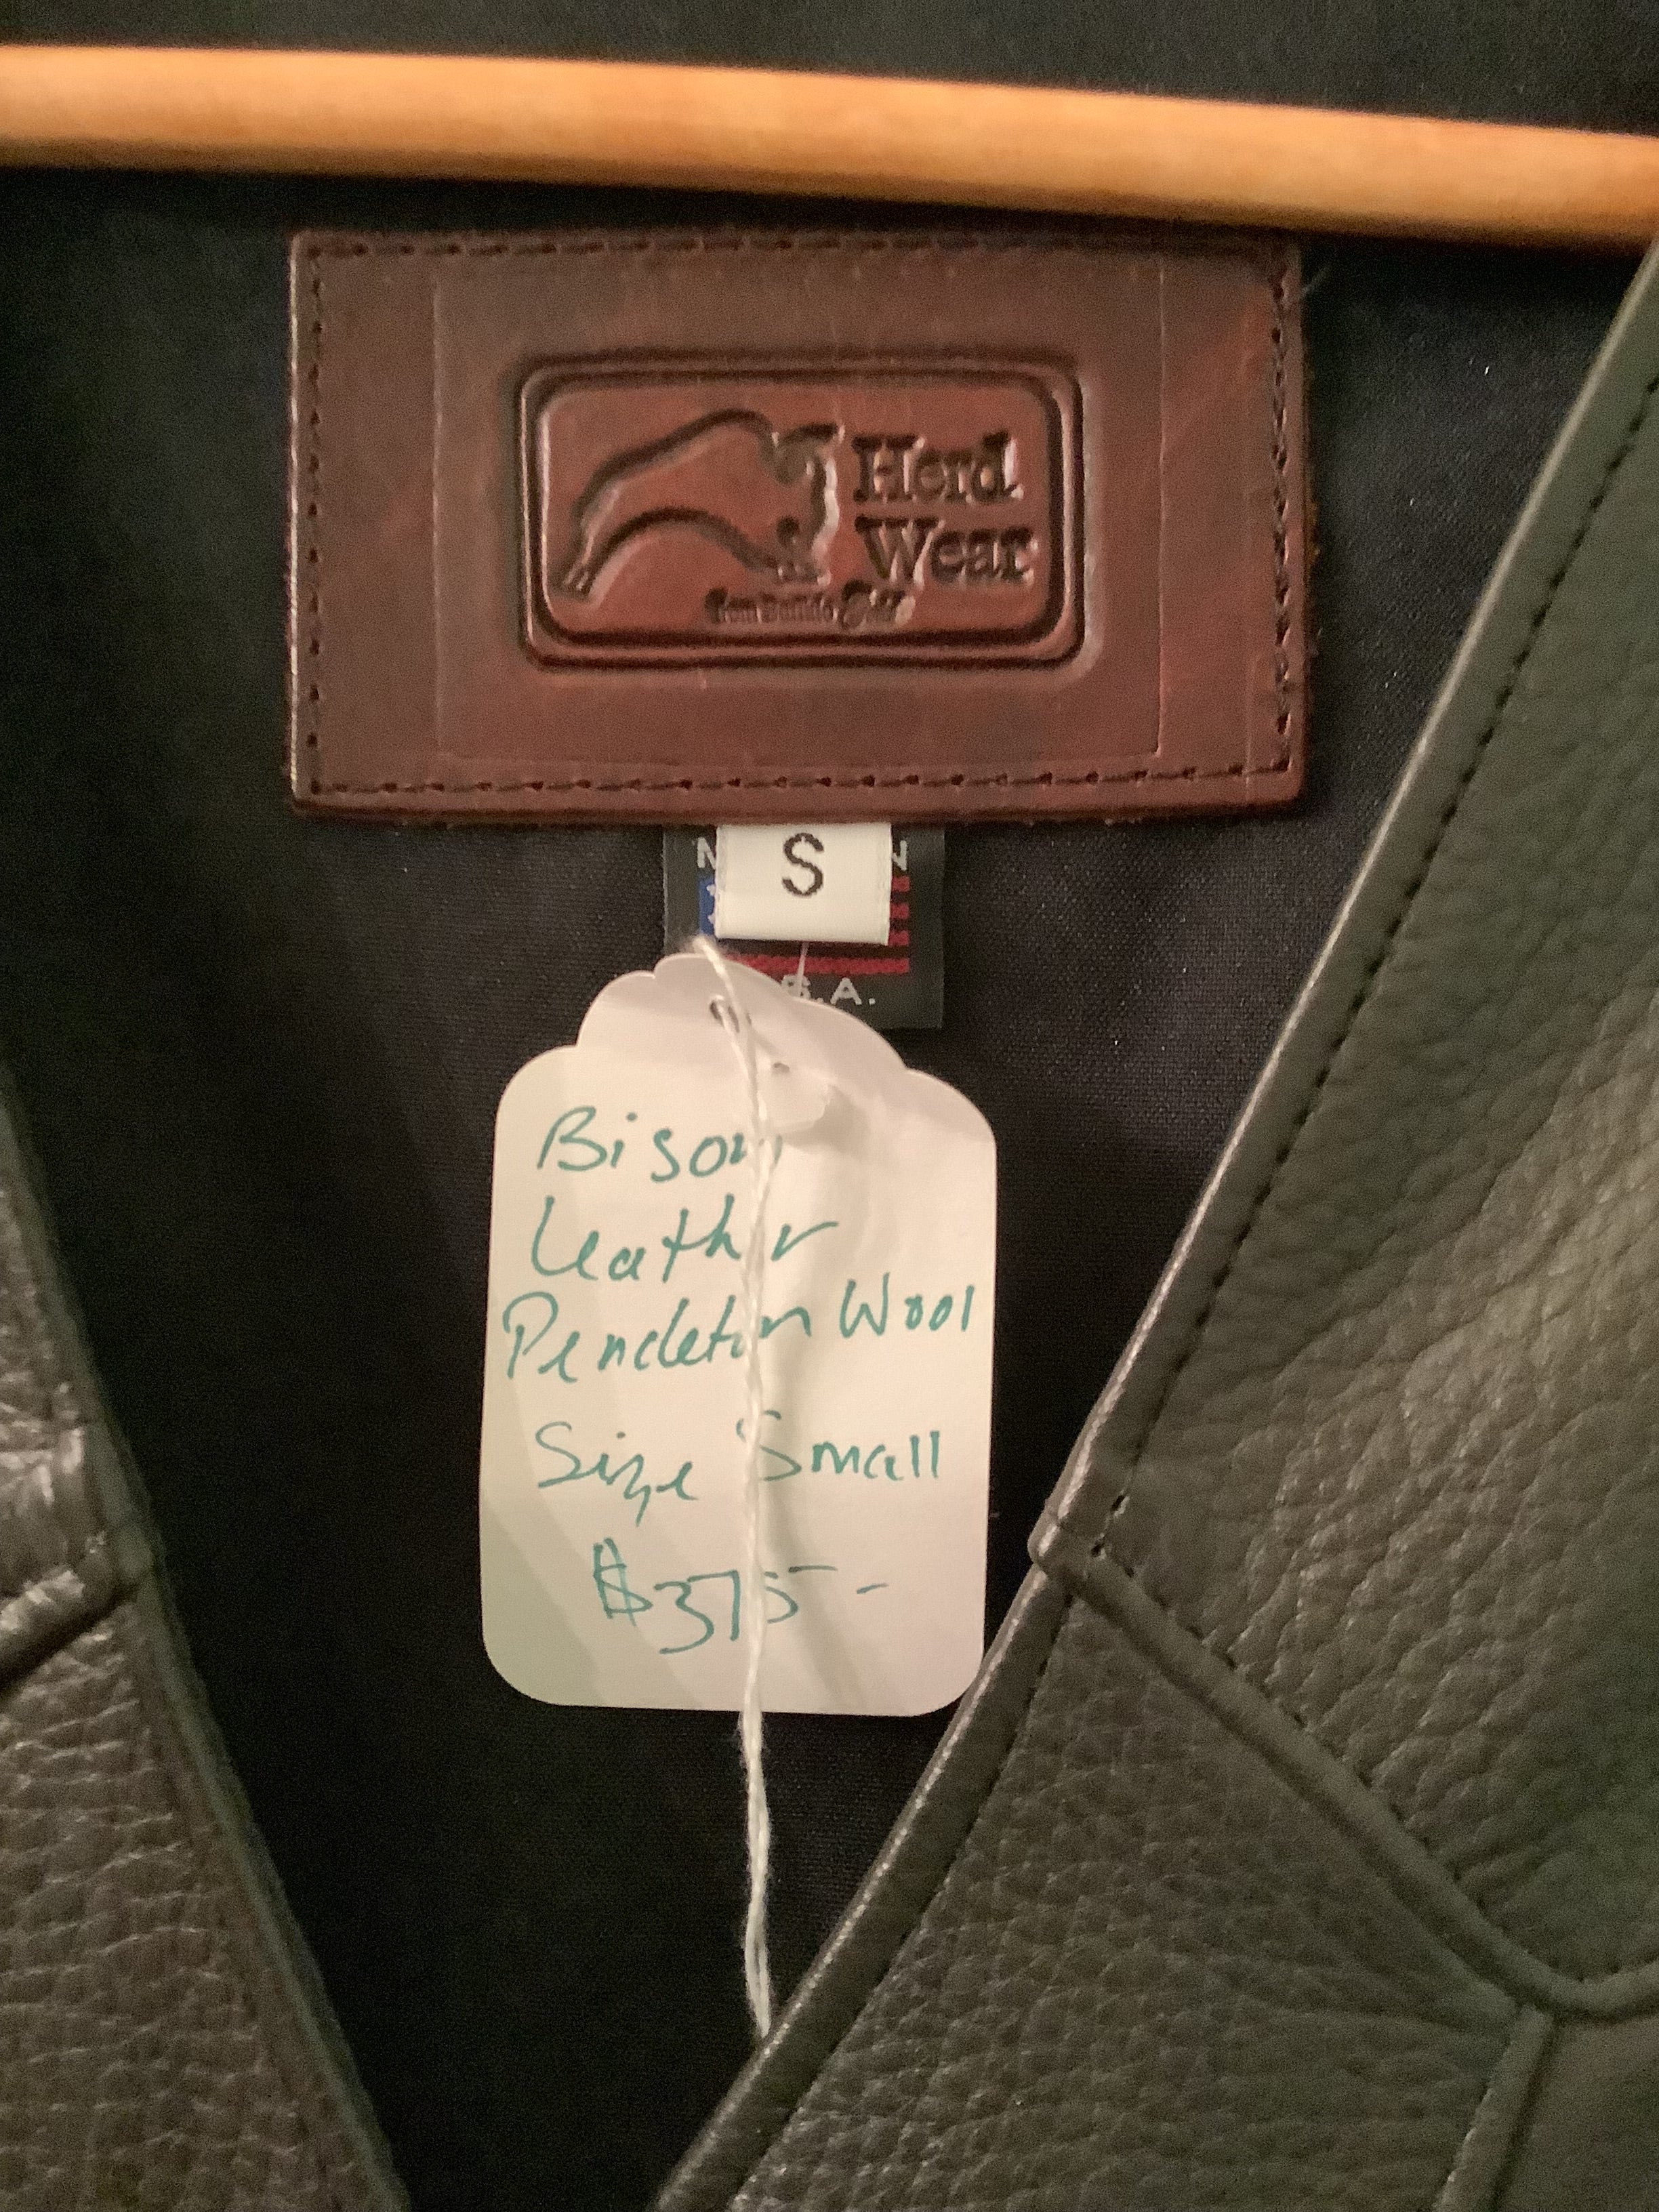 Bison Leather/Pendleton Wool Ladies vests - small